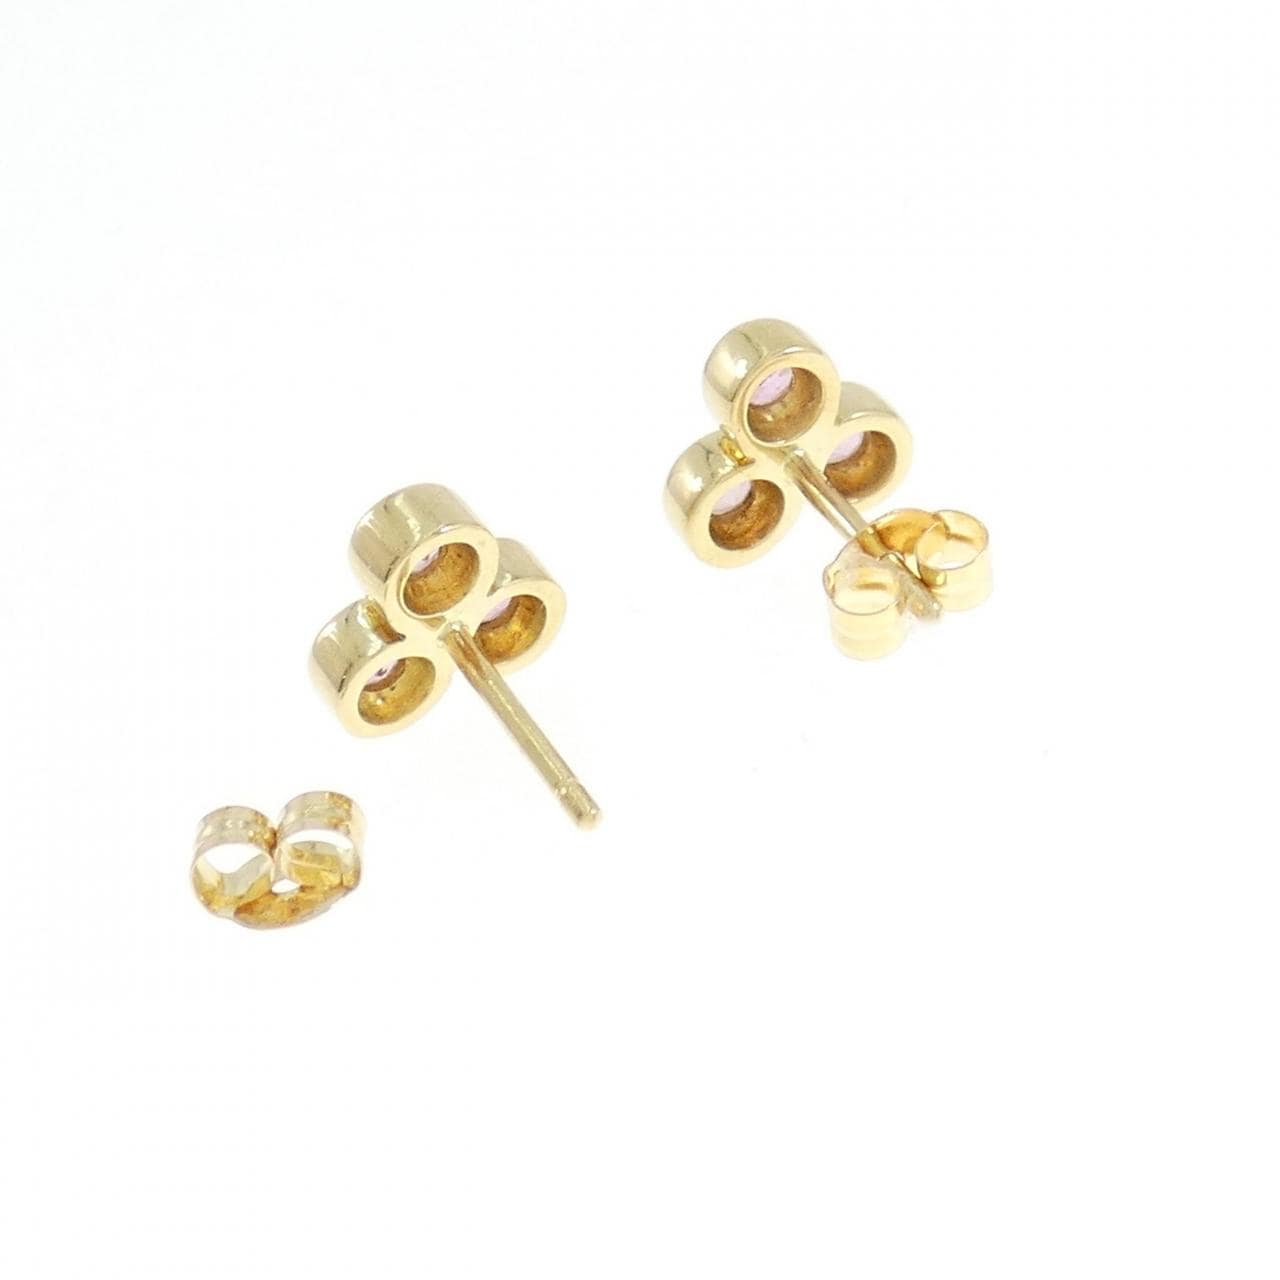 750YG/K18YG Tourmaline earrings